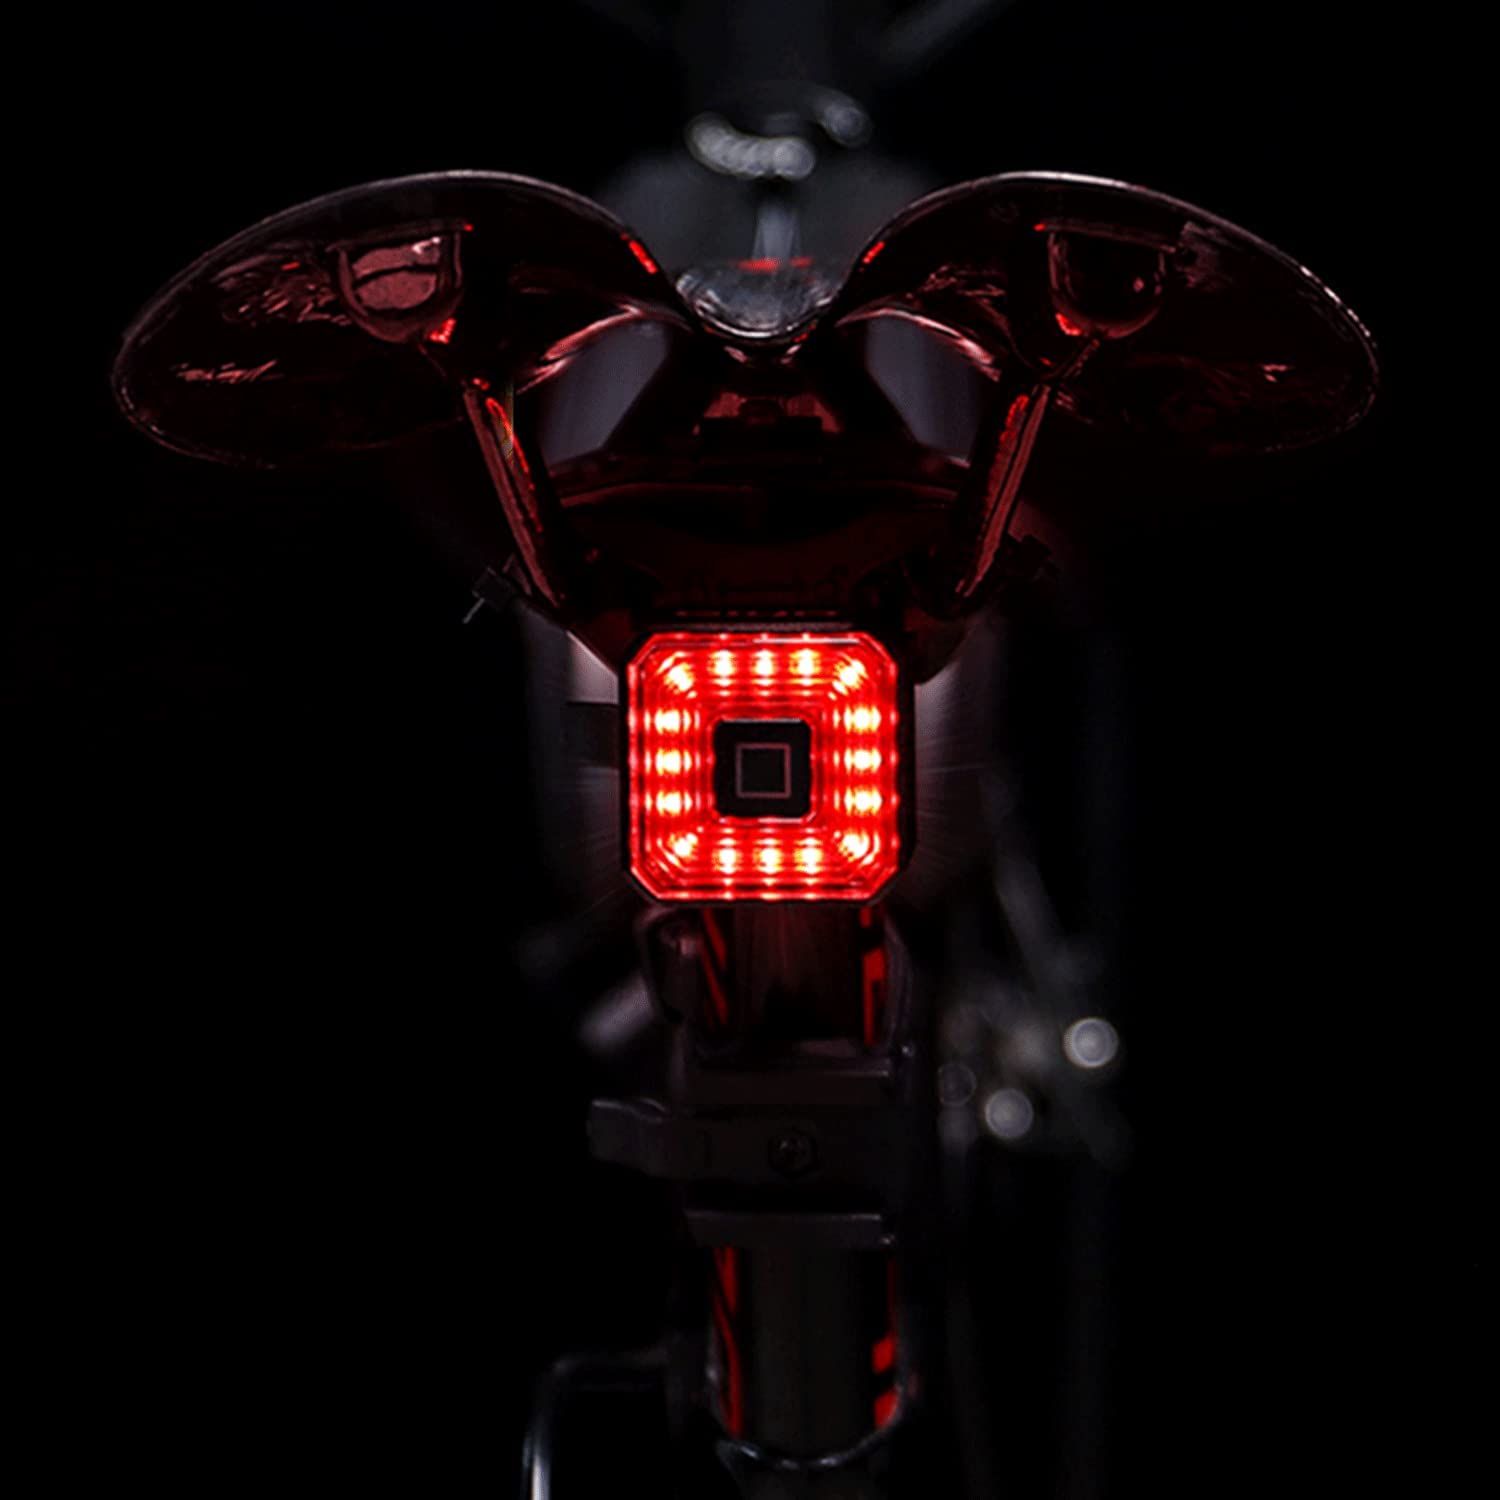 CXWXC Smart Bike Tail Lights - Waterproof Bike Rear Lights USB Rechargeable - Ultra Bright Led Brake Light, Cycling Riding Safety Flashlight